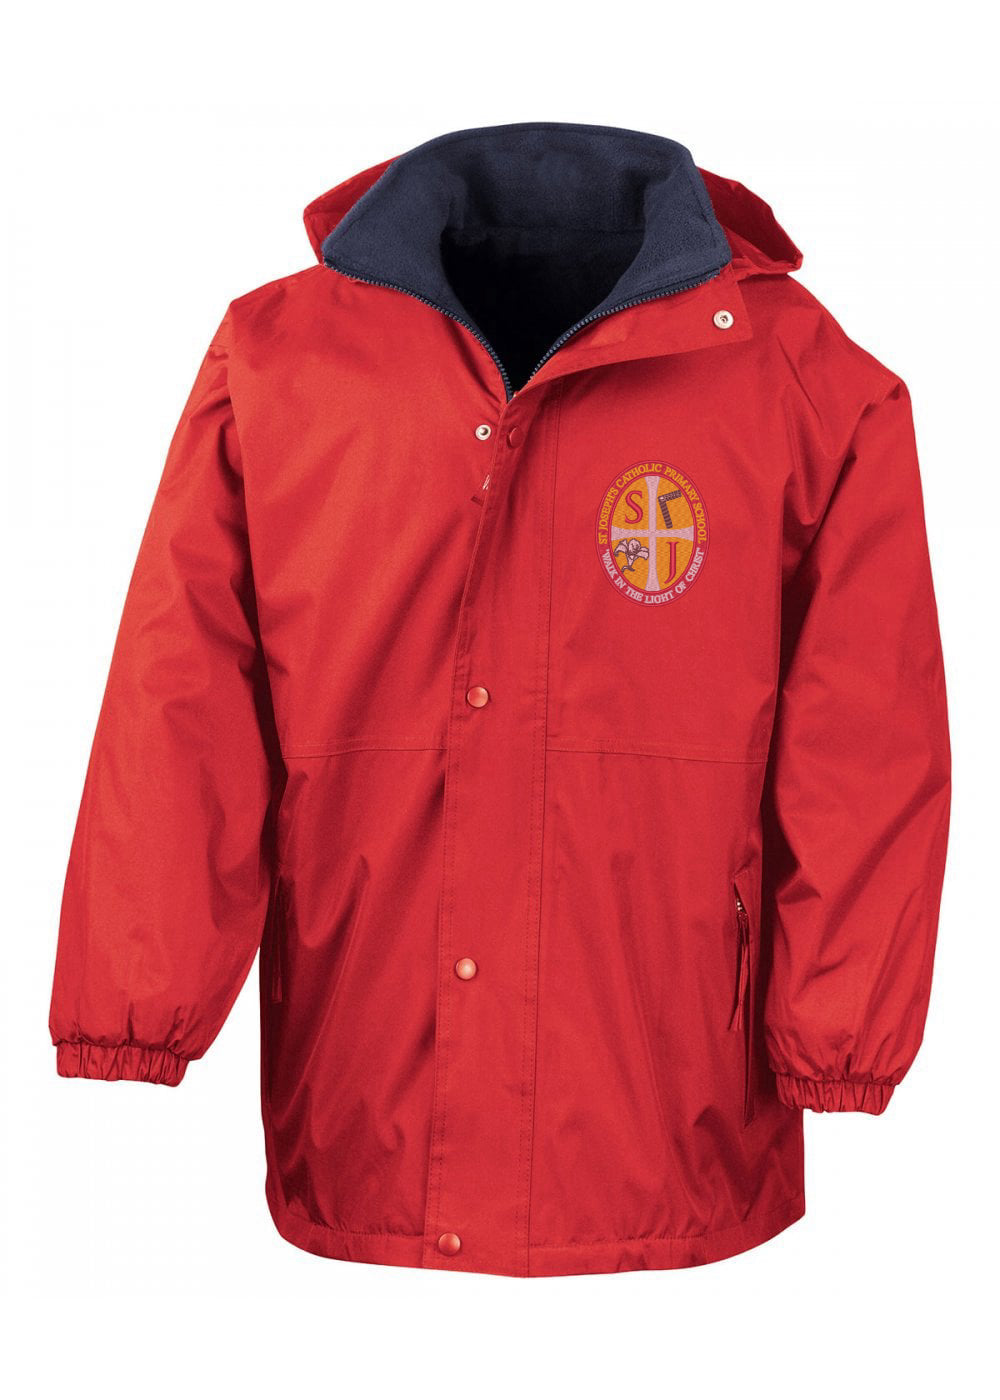 St. Josephs Billingham Red Winter Storm Jacket